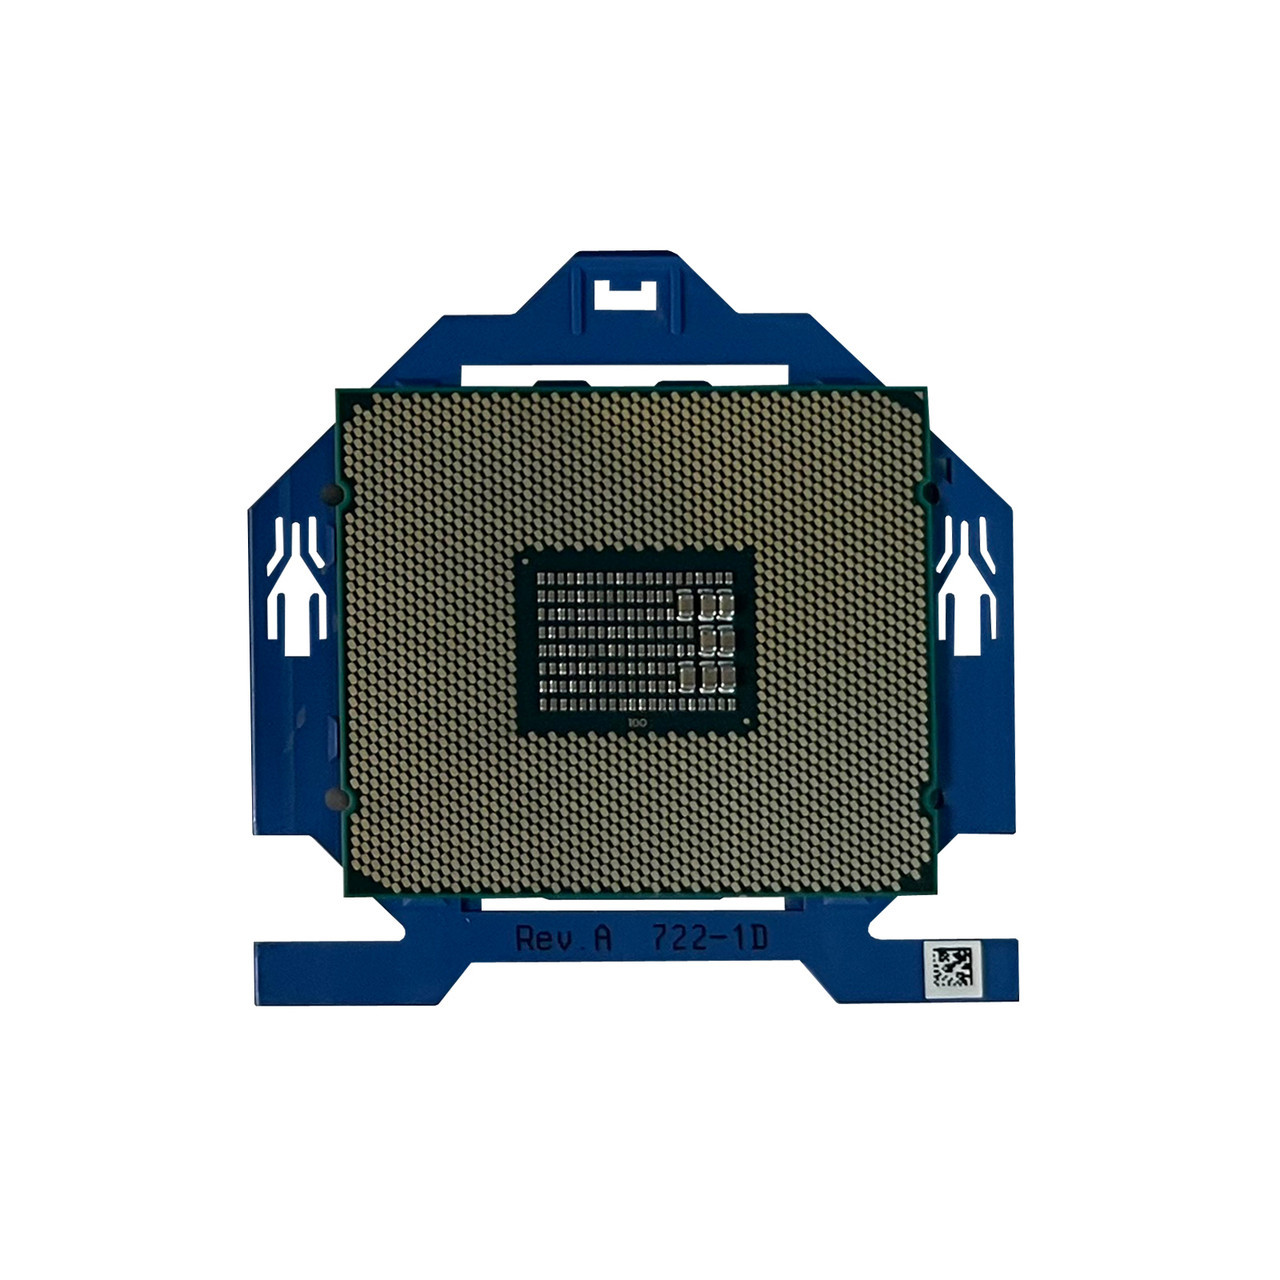 HP 826104-L21 ML110 Gen9 Xeon E5-2630L V4 10C 1.80Ghz Processor